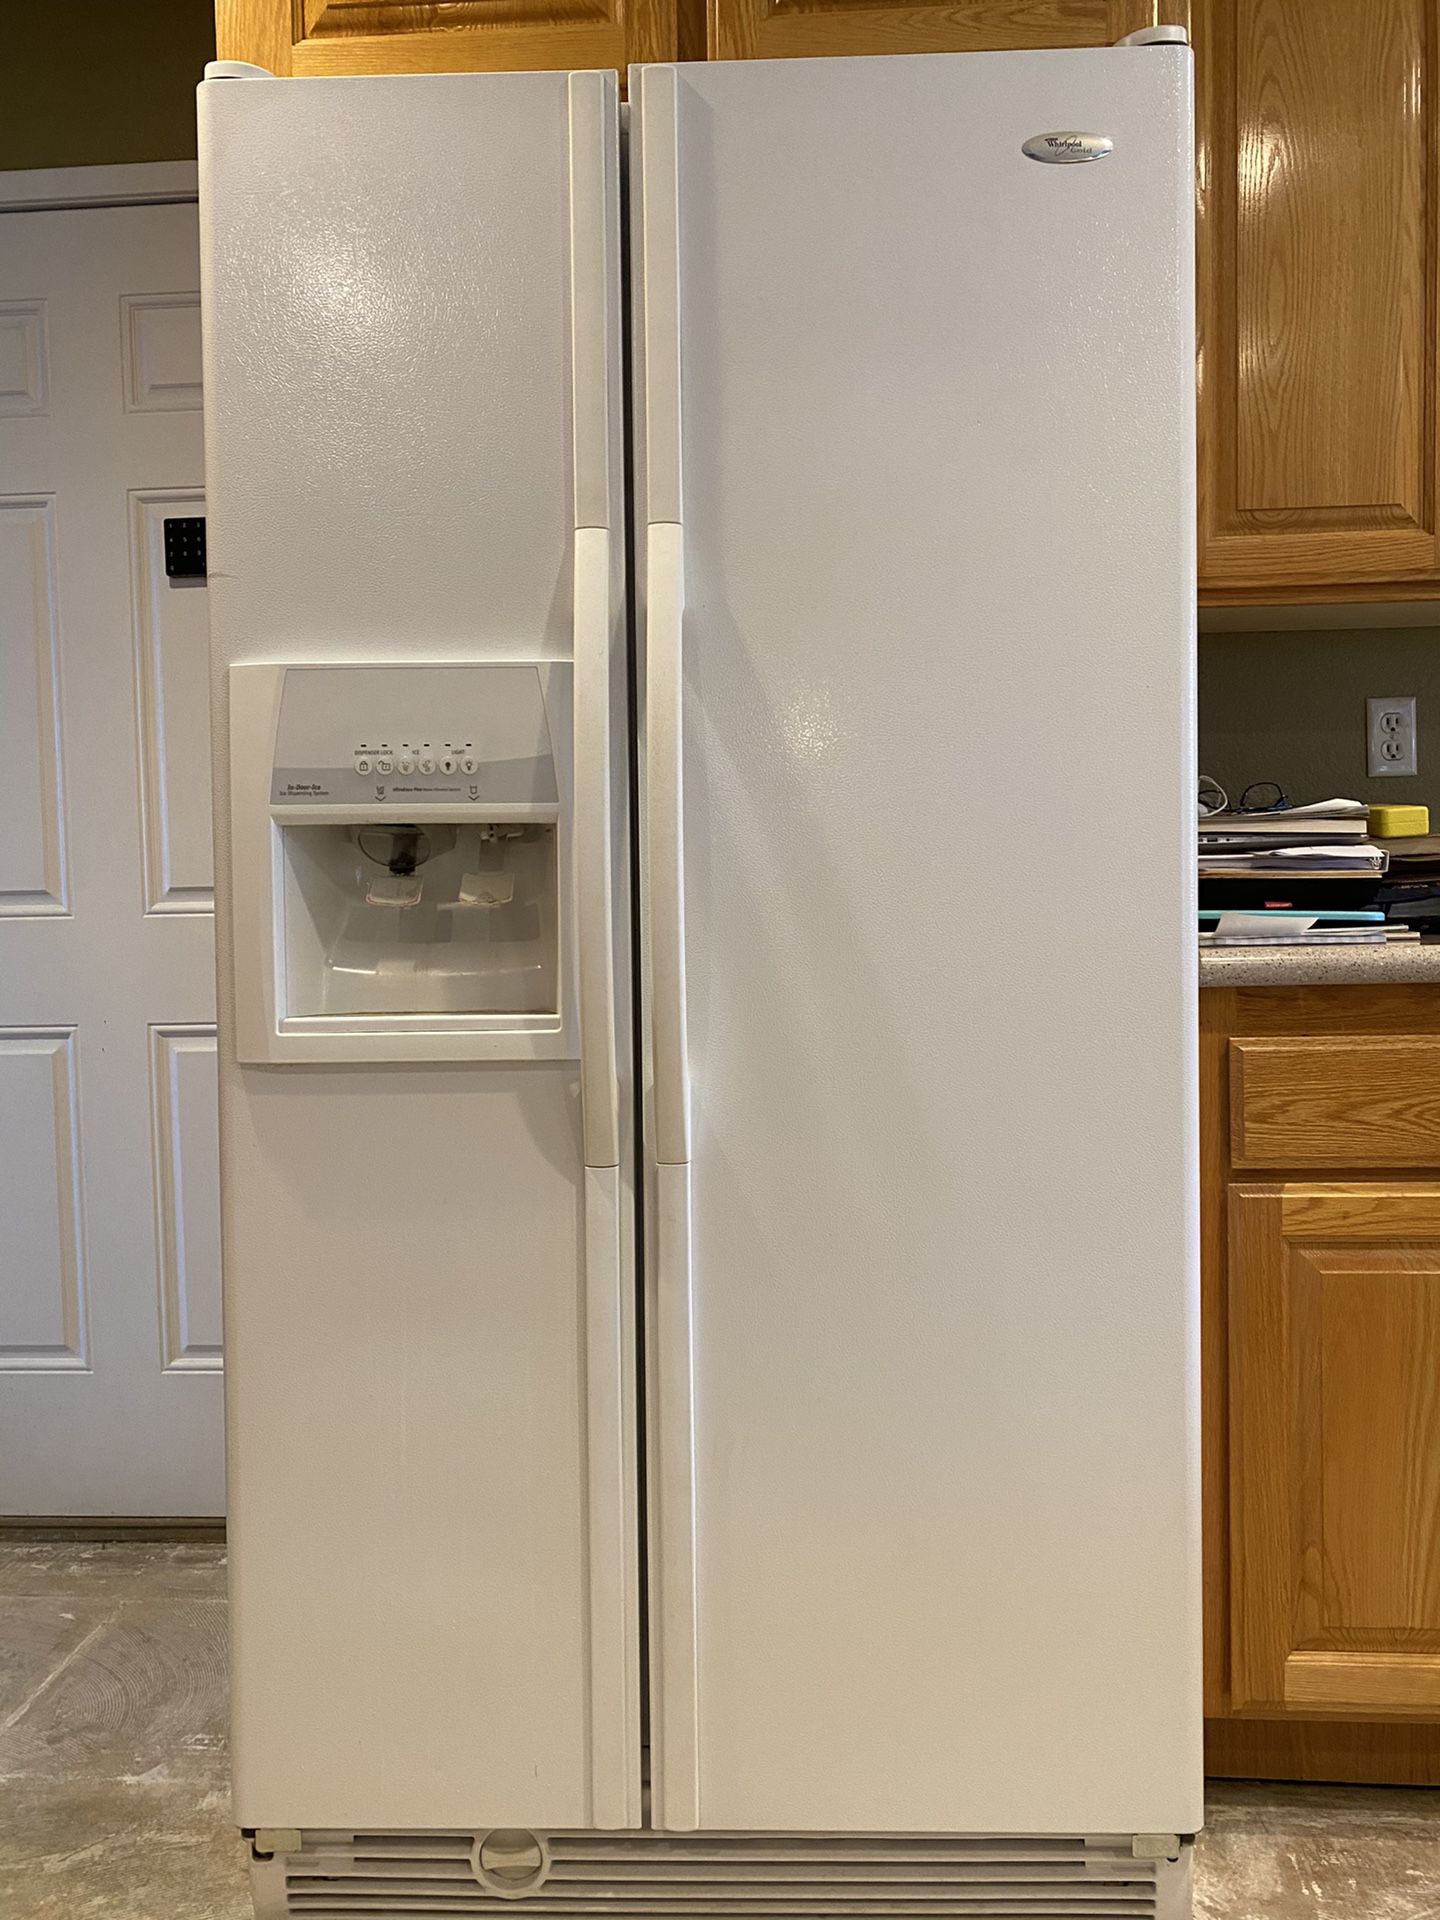 Whirlpool side by side Refrigerator